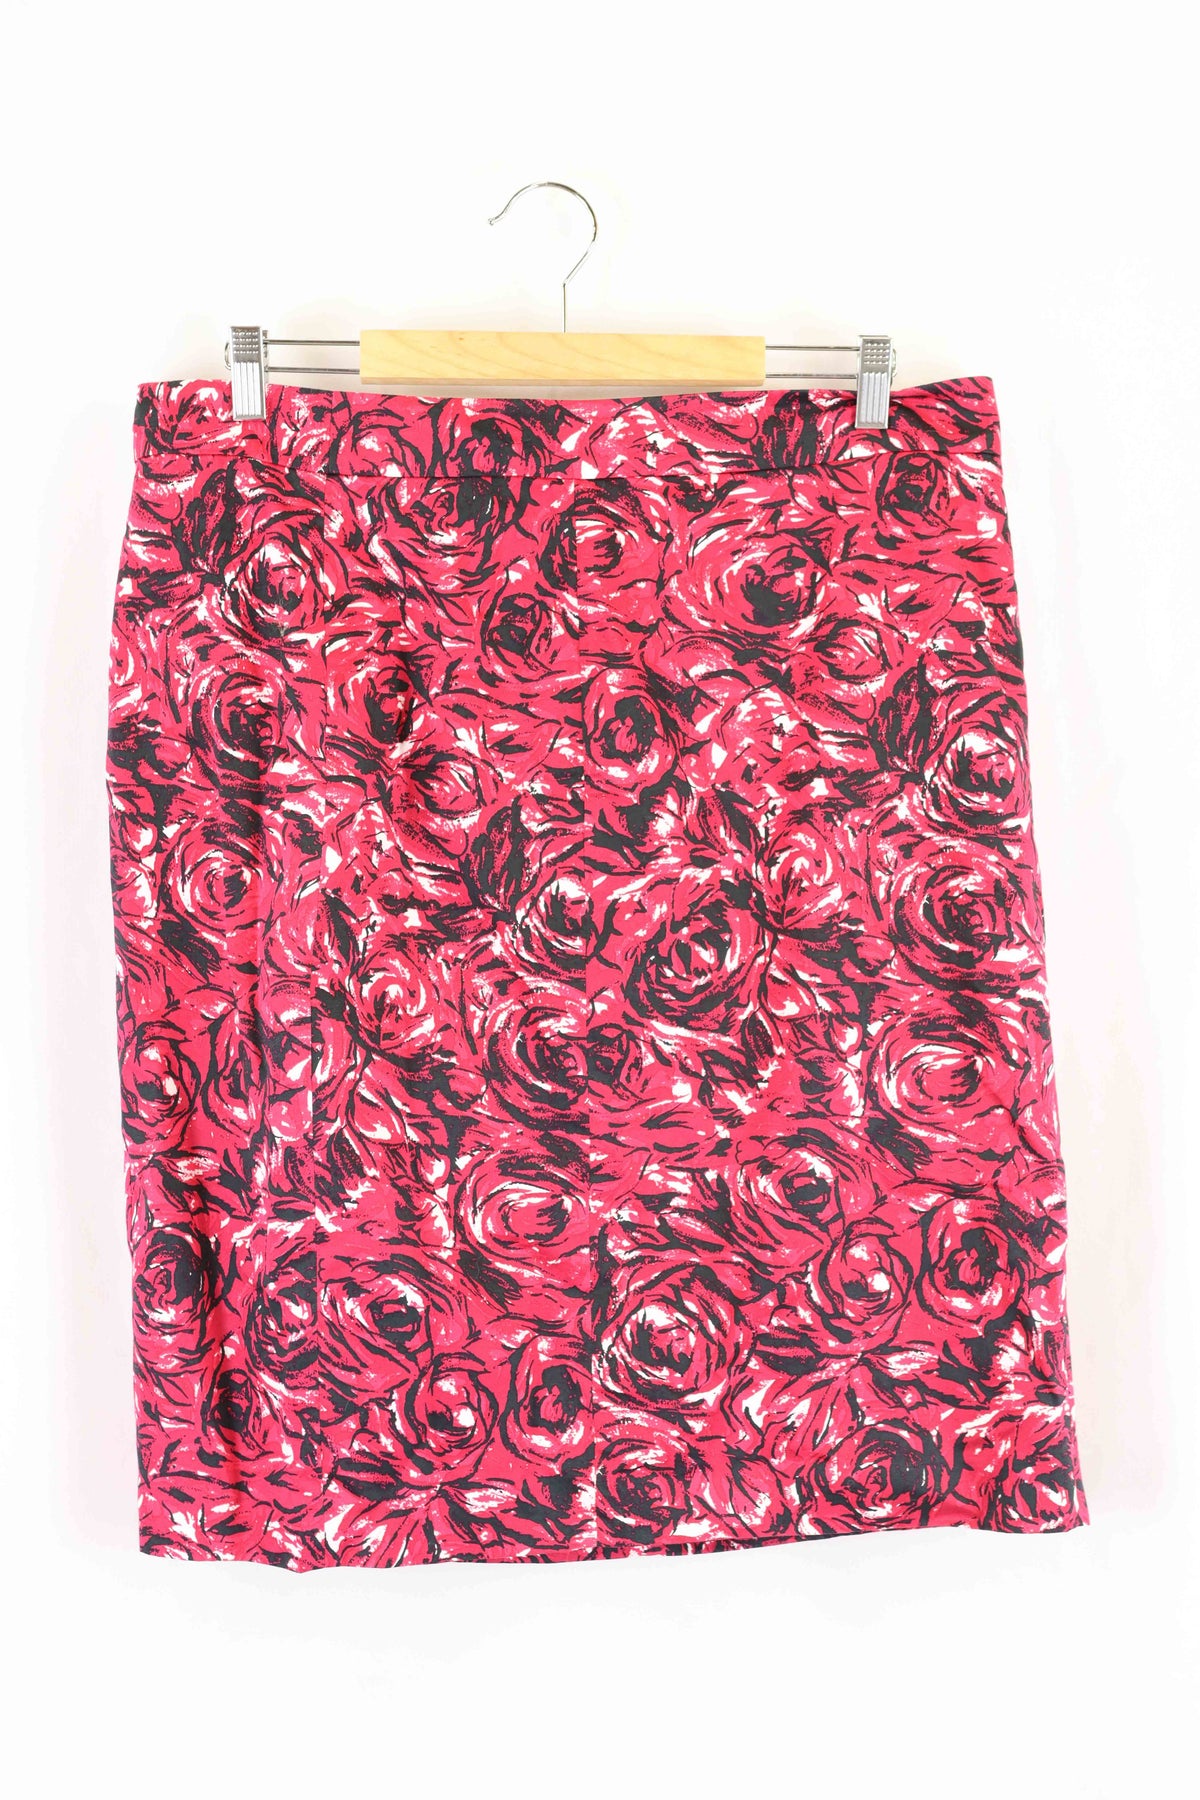 David Lawrence Red Floral Skirt 16